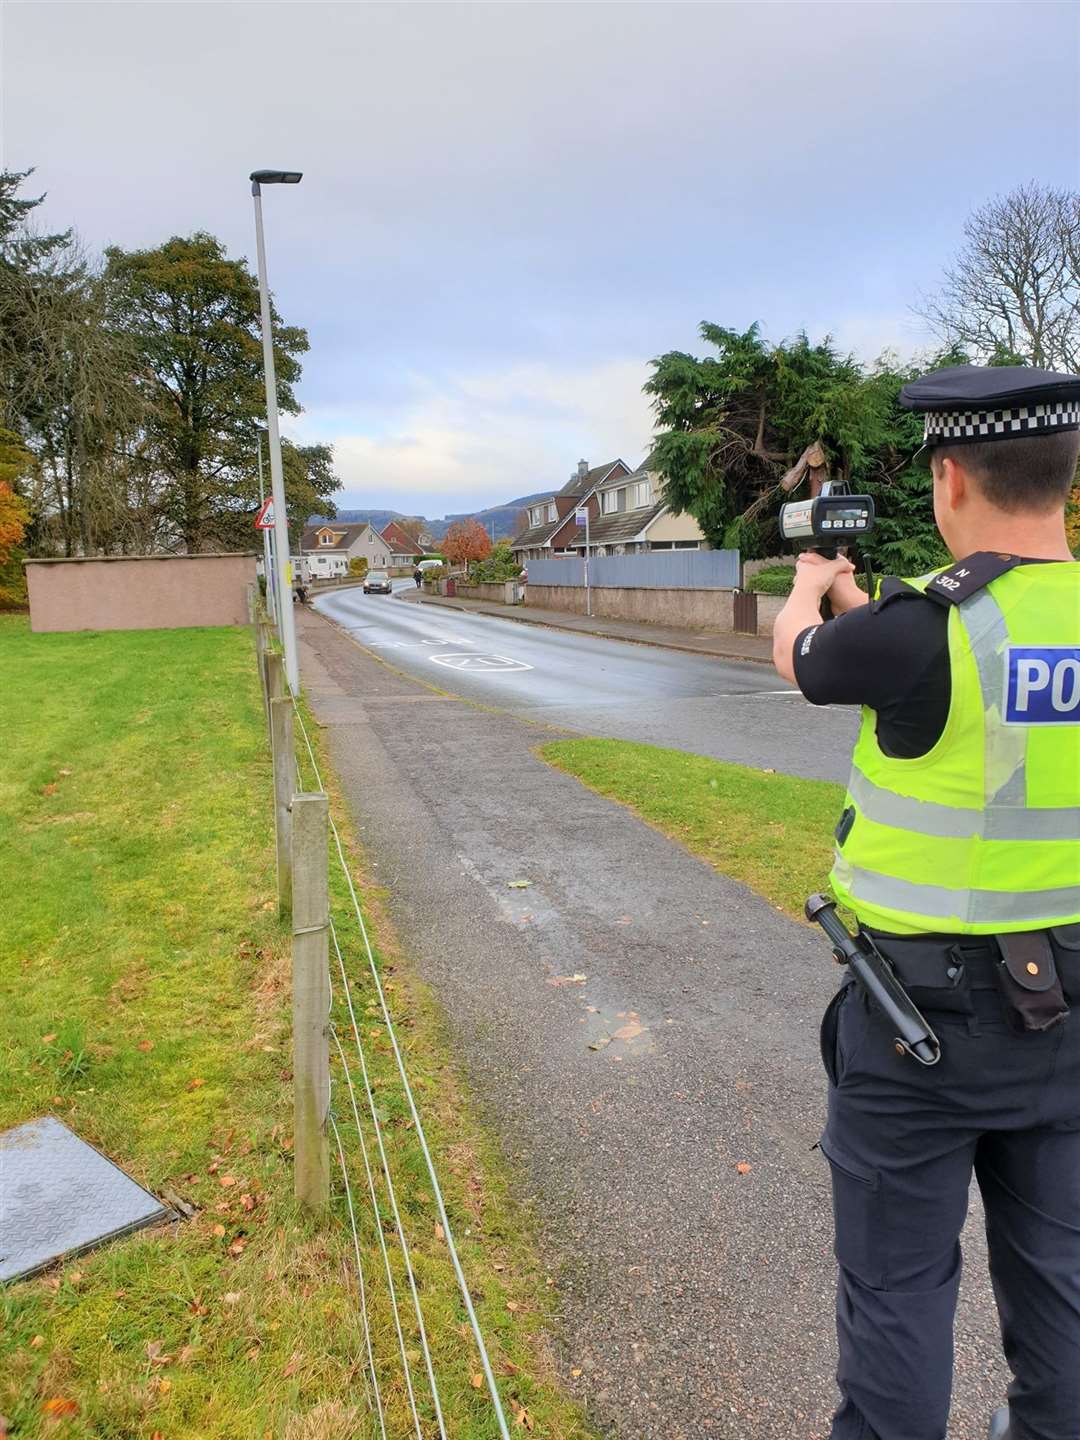 Community police on traffic checks around Inverness schools